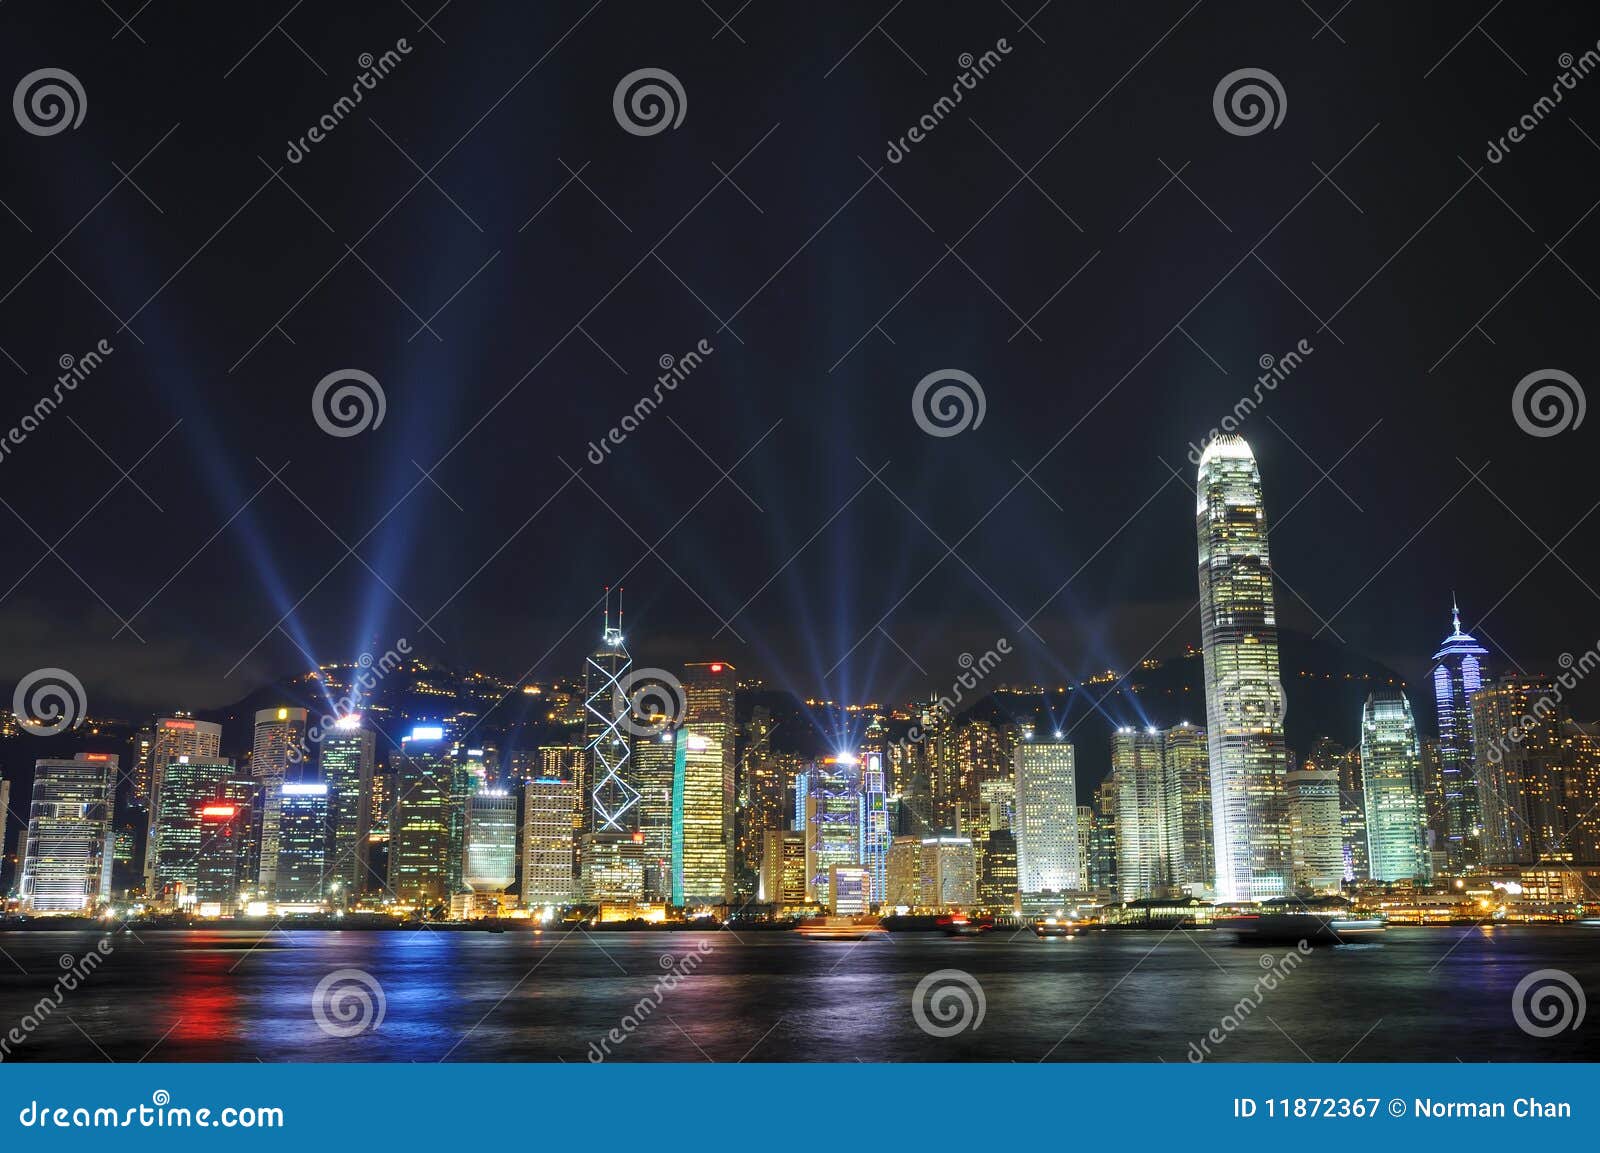 interactive lights show in hong kong